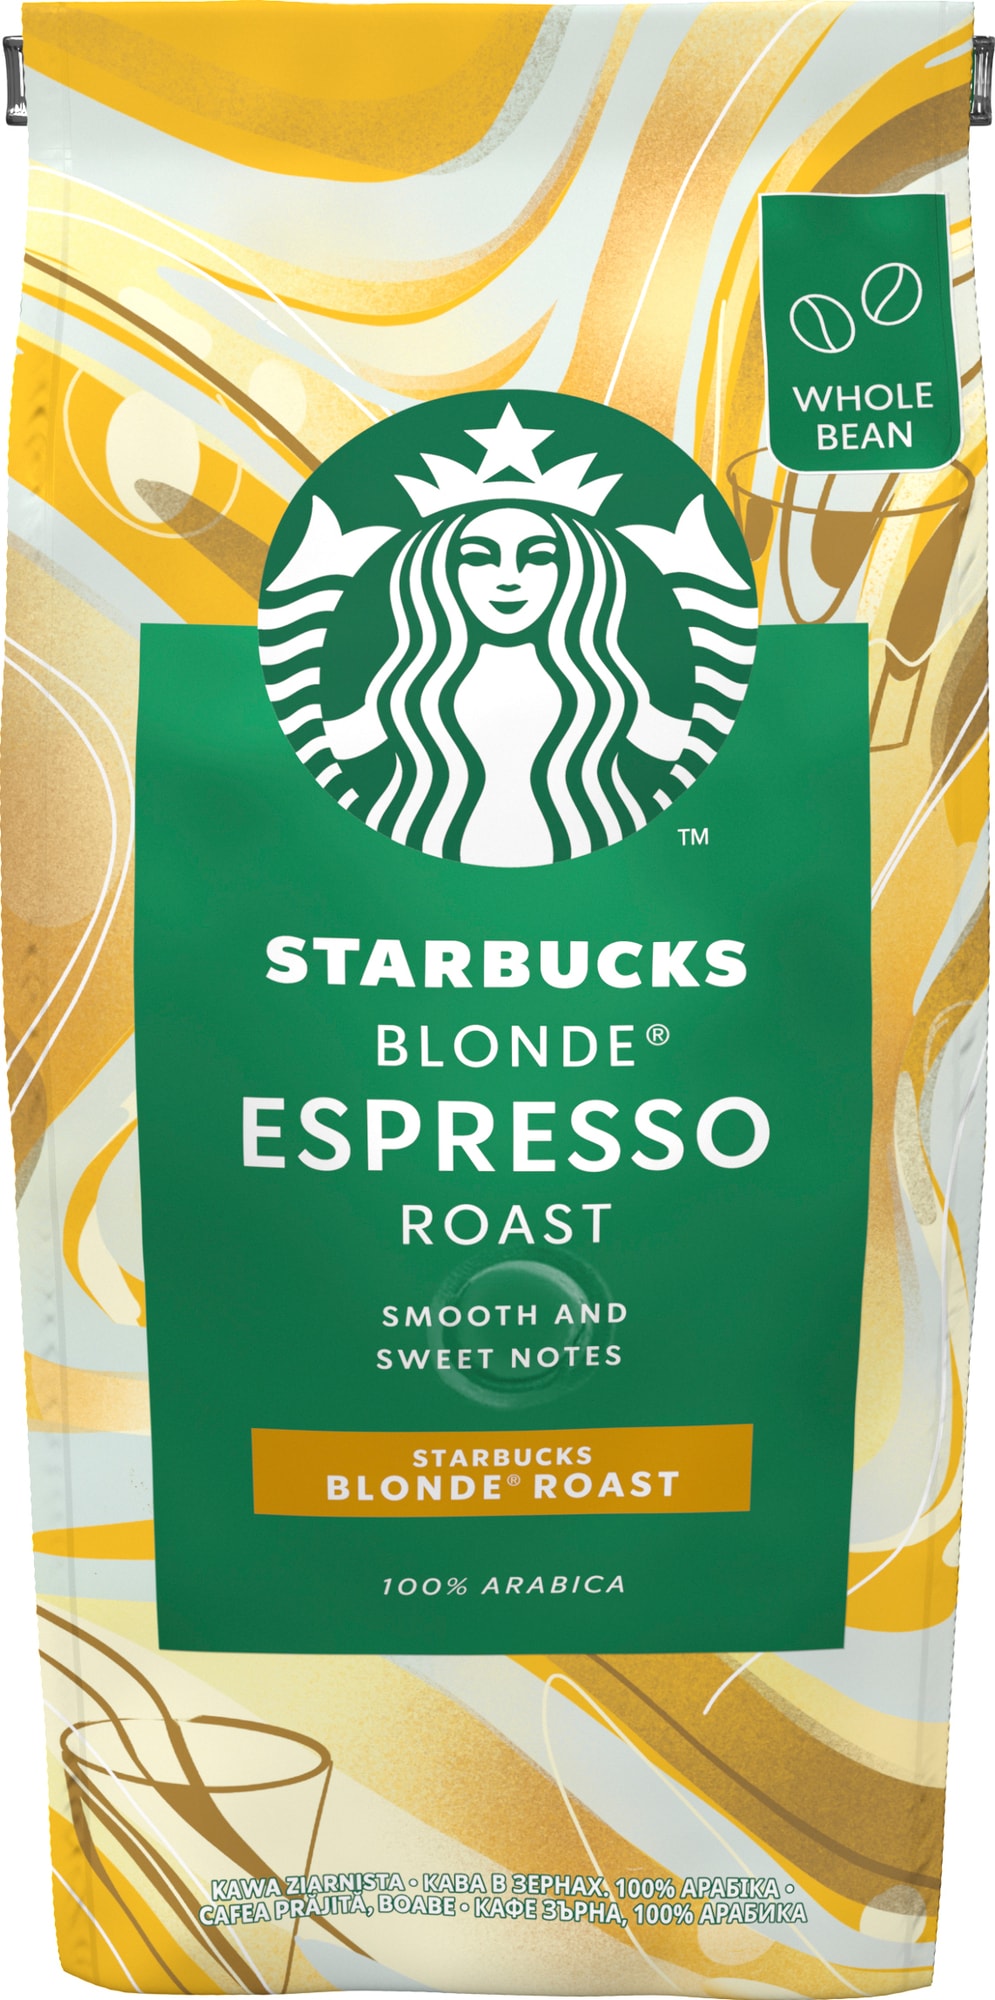 Starbucks Espresso Blonde Roast whole hele kaffebønner thumbnail